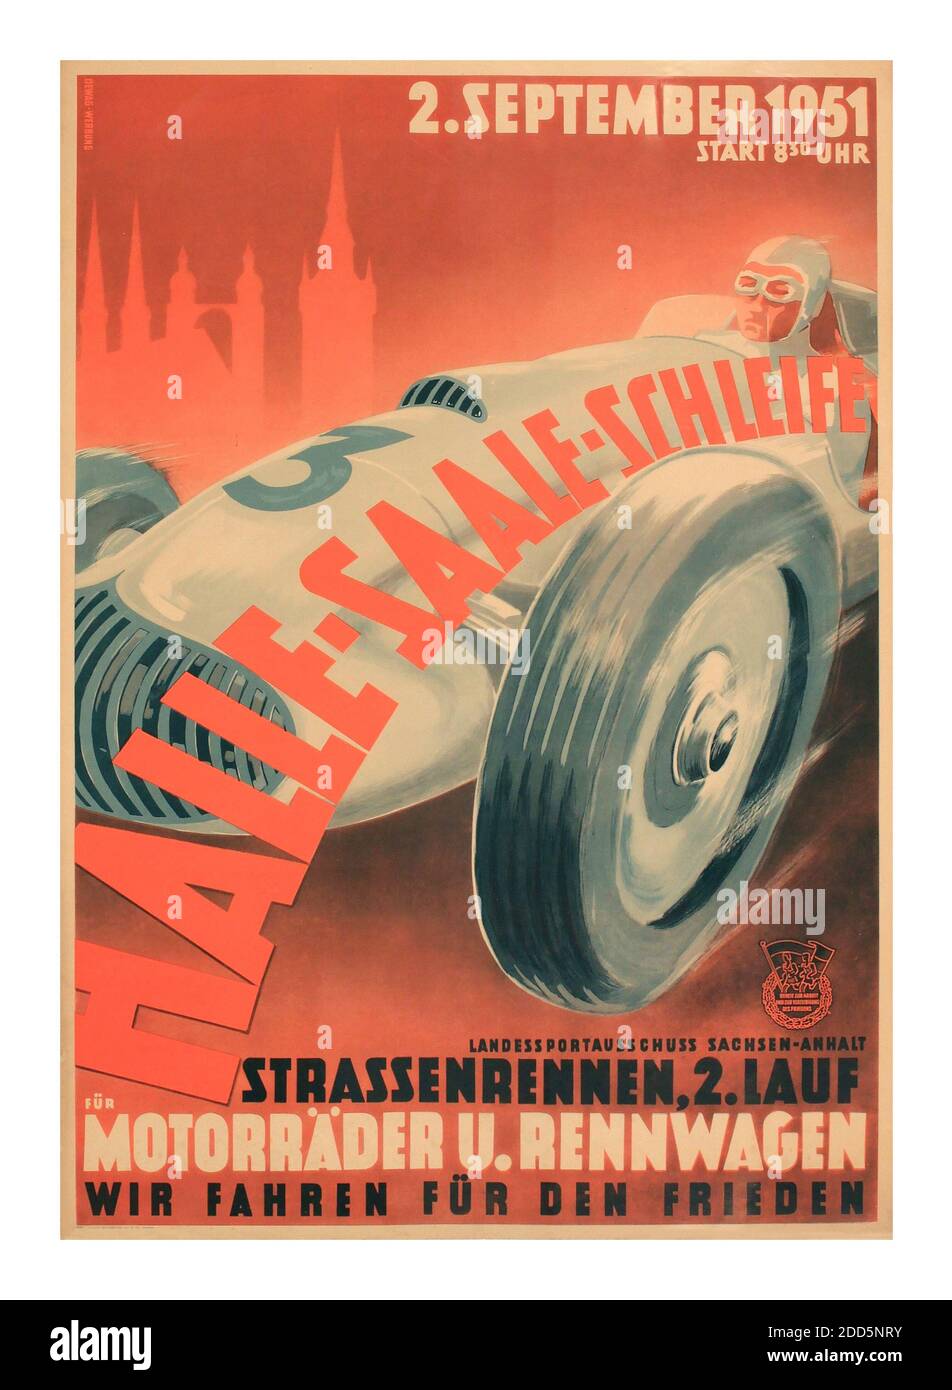 Halle-Saale-Schleife, 2. September, 1951, original poster printed by Dewag-Werburg 1951 - Motorrader U. Rennwagen. 'Motorcycles and racing cars' wir fahren fur den frieden ''we drive for peace' Stock Photo